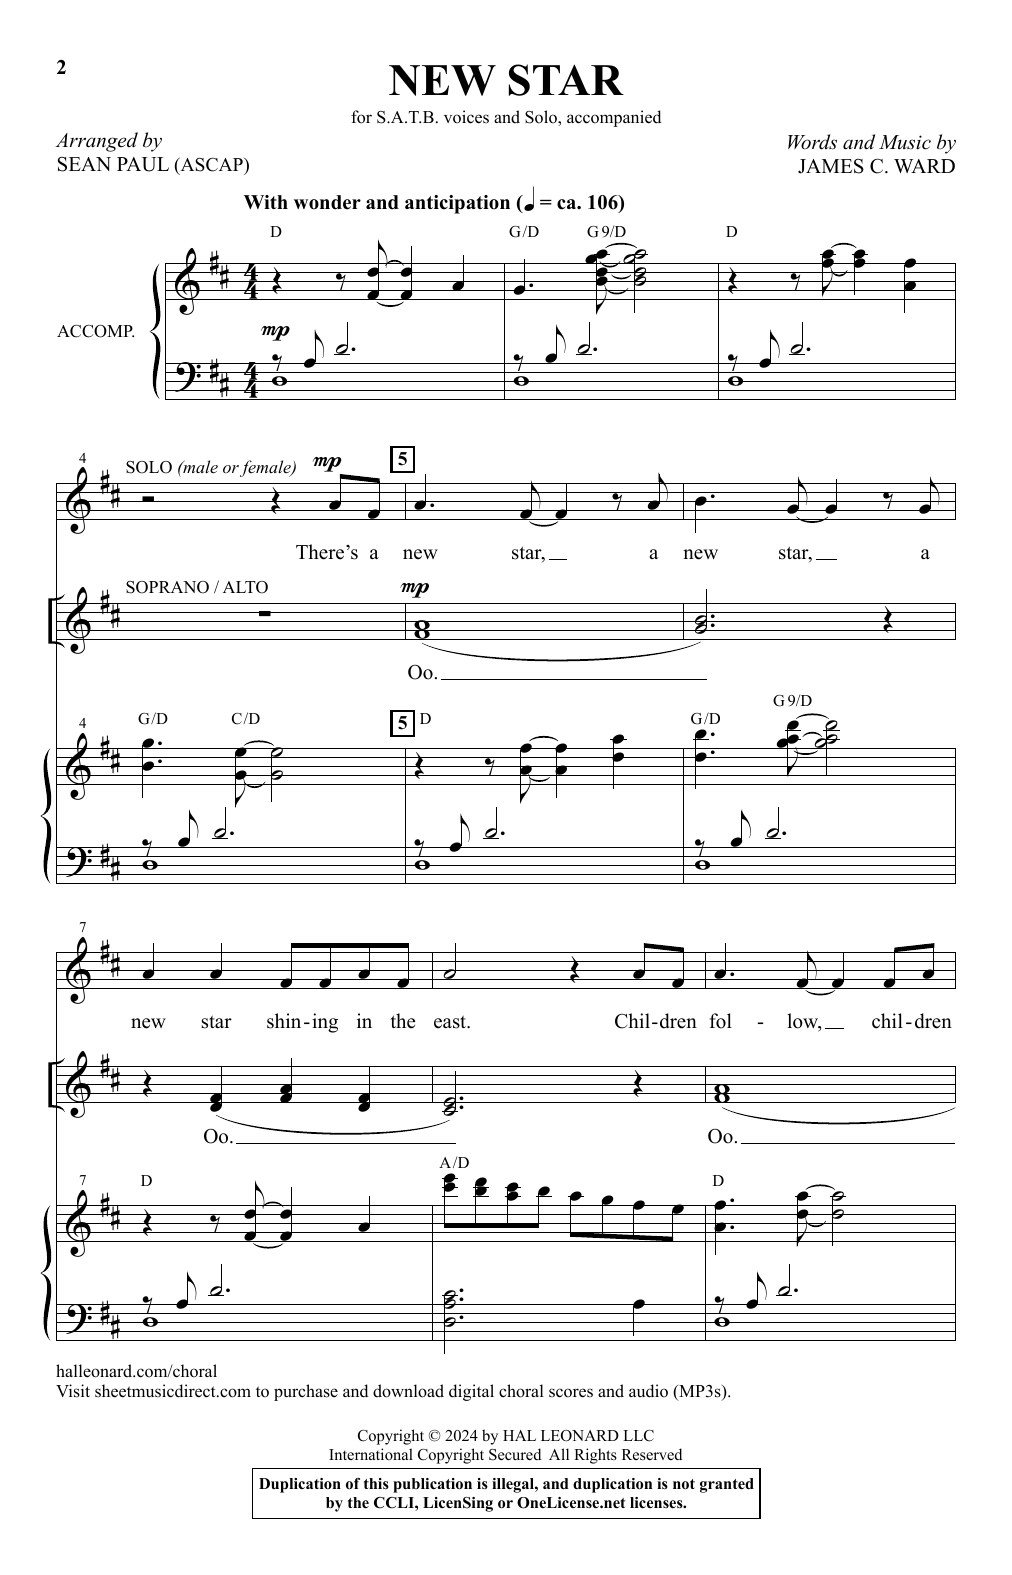 James C. Ward New Star (arr. Sean Paul) Sheet Music Notes & Chords for SATB Choir - Download or Print PDF